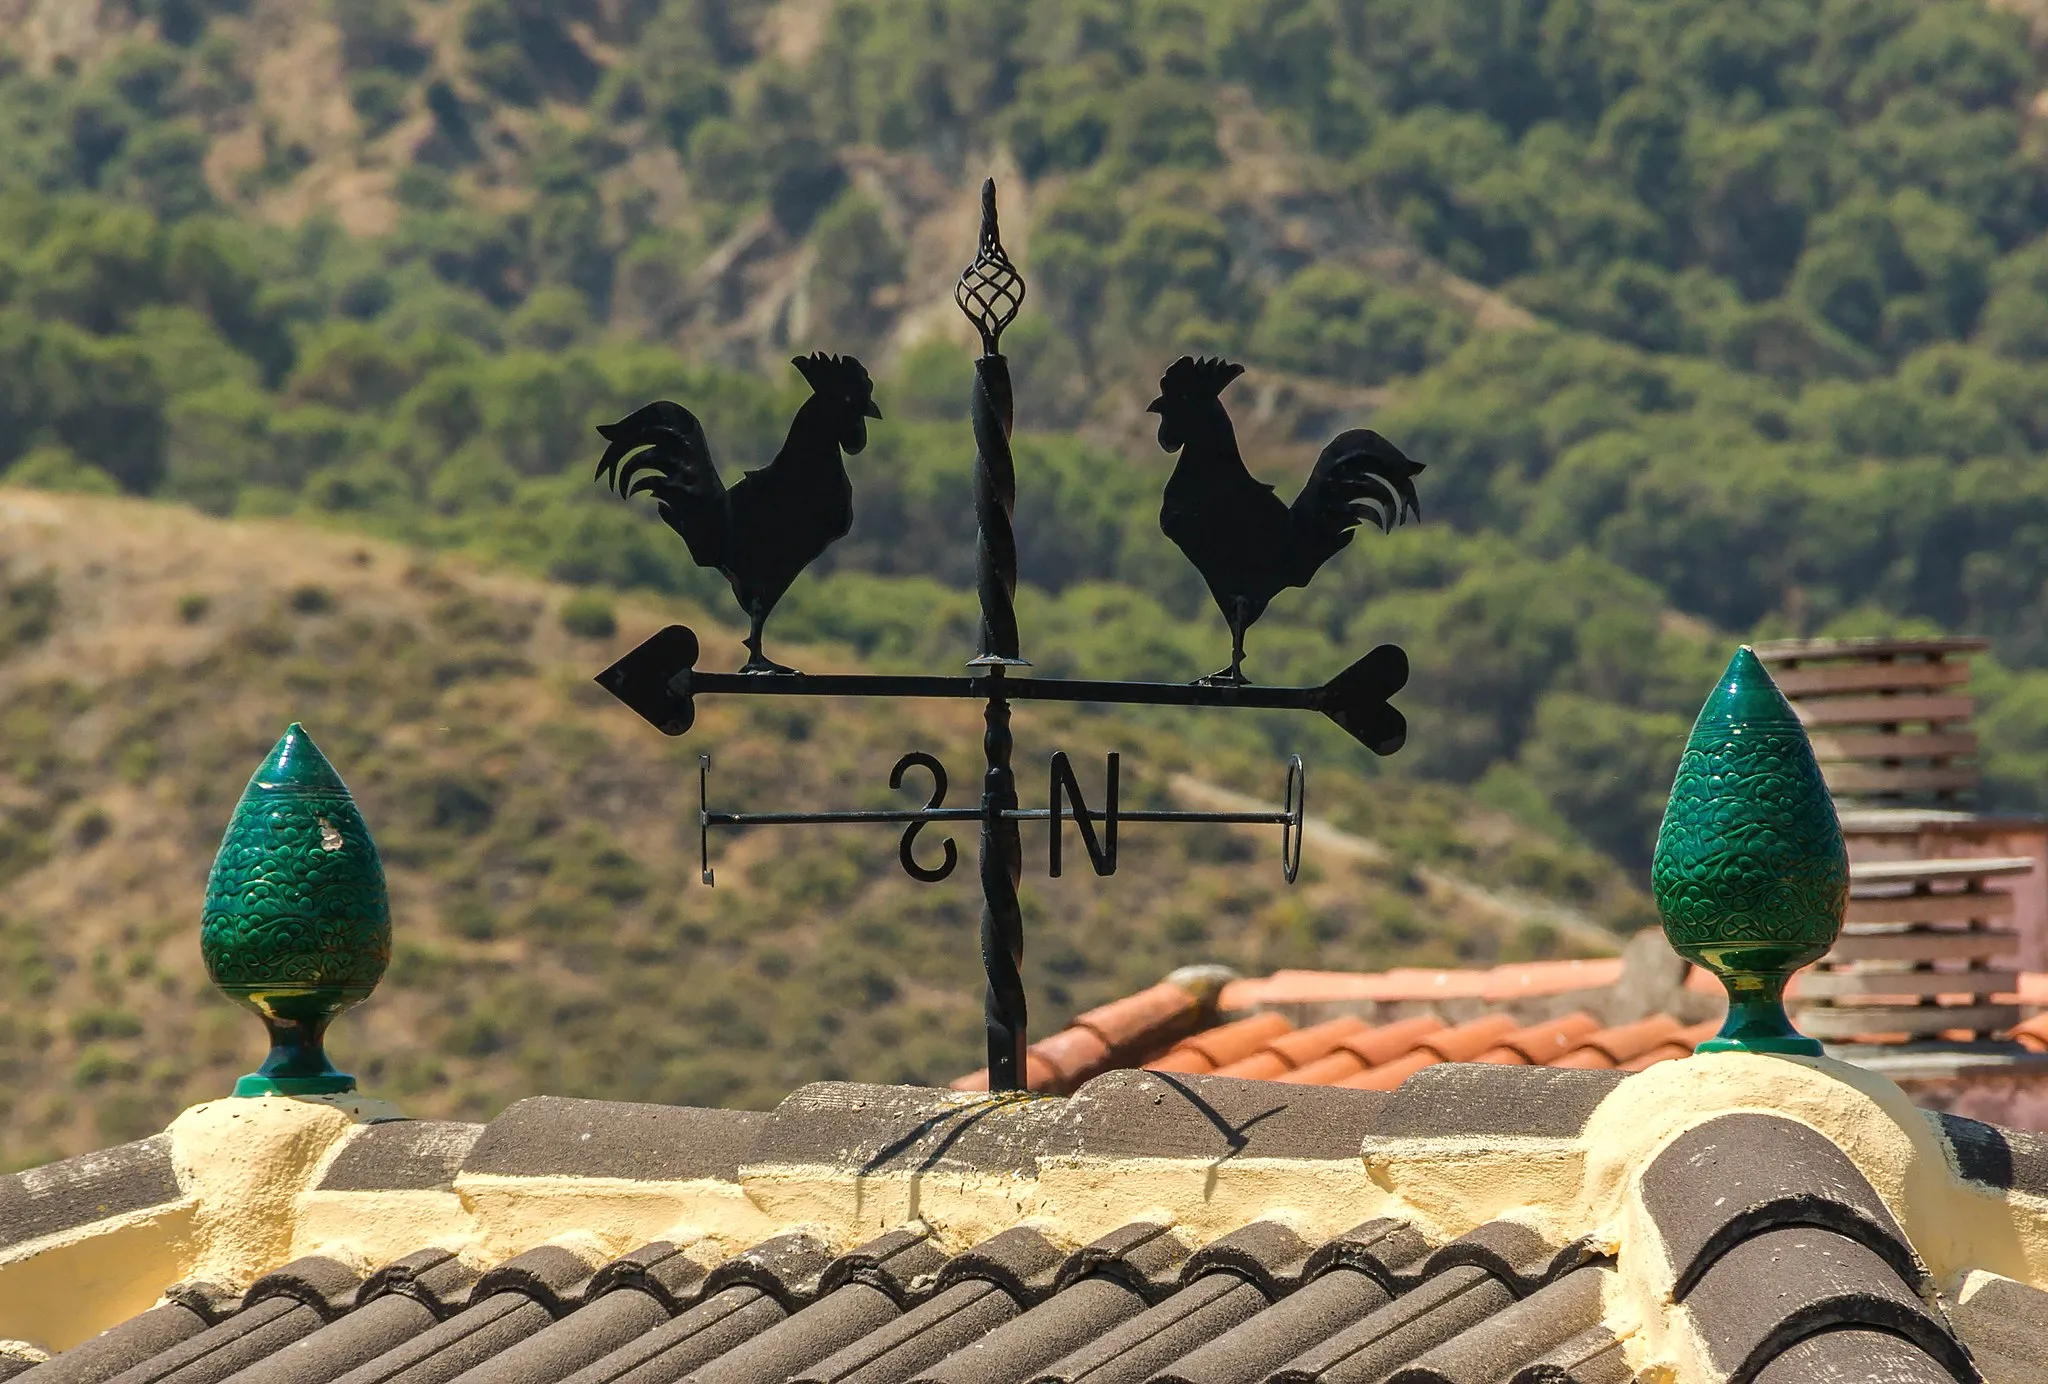 Photo showing: A weathercock on a roof, Cenes de la Vega, Granada, Spain.